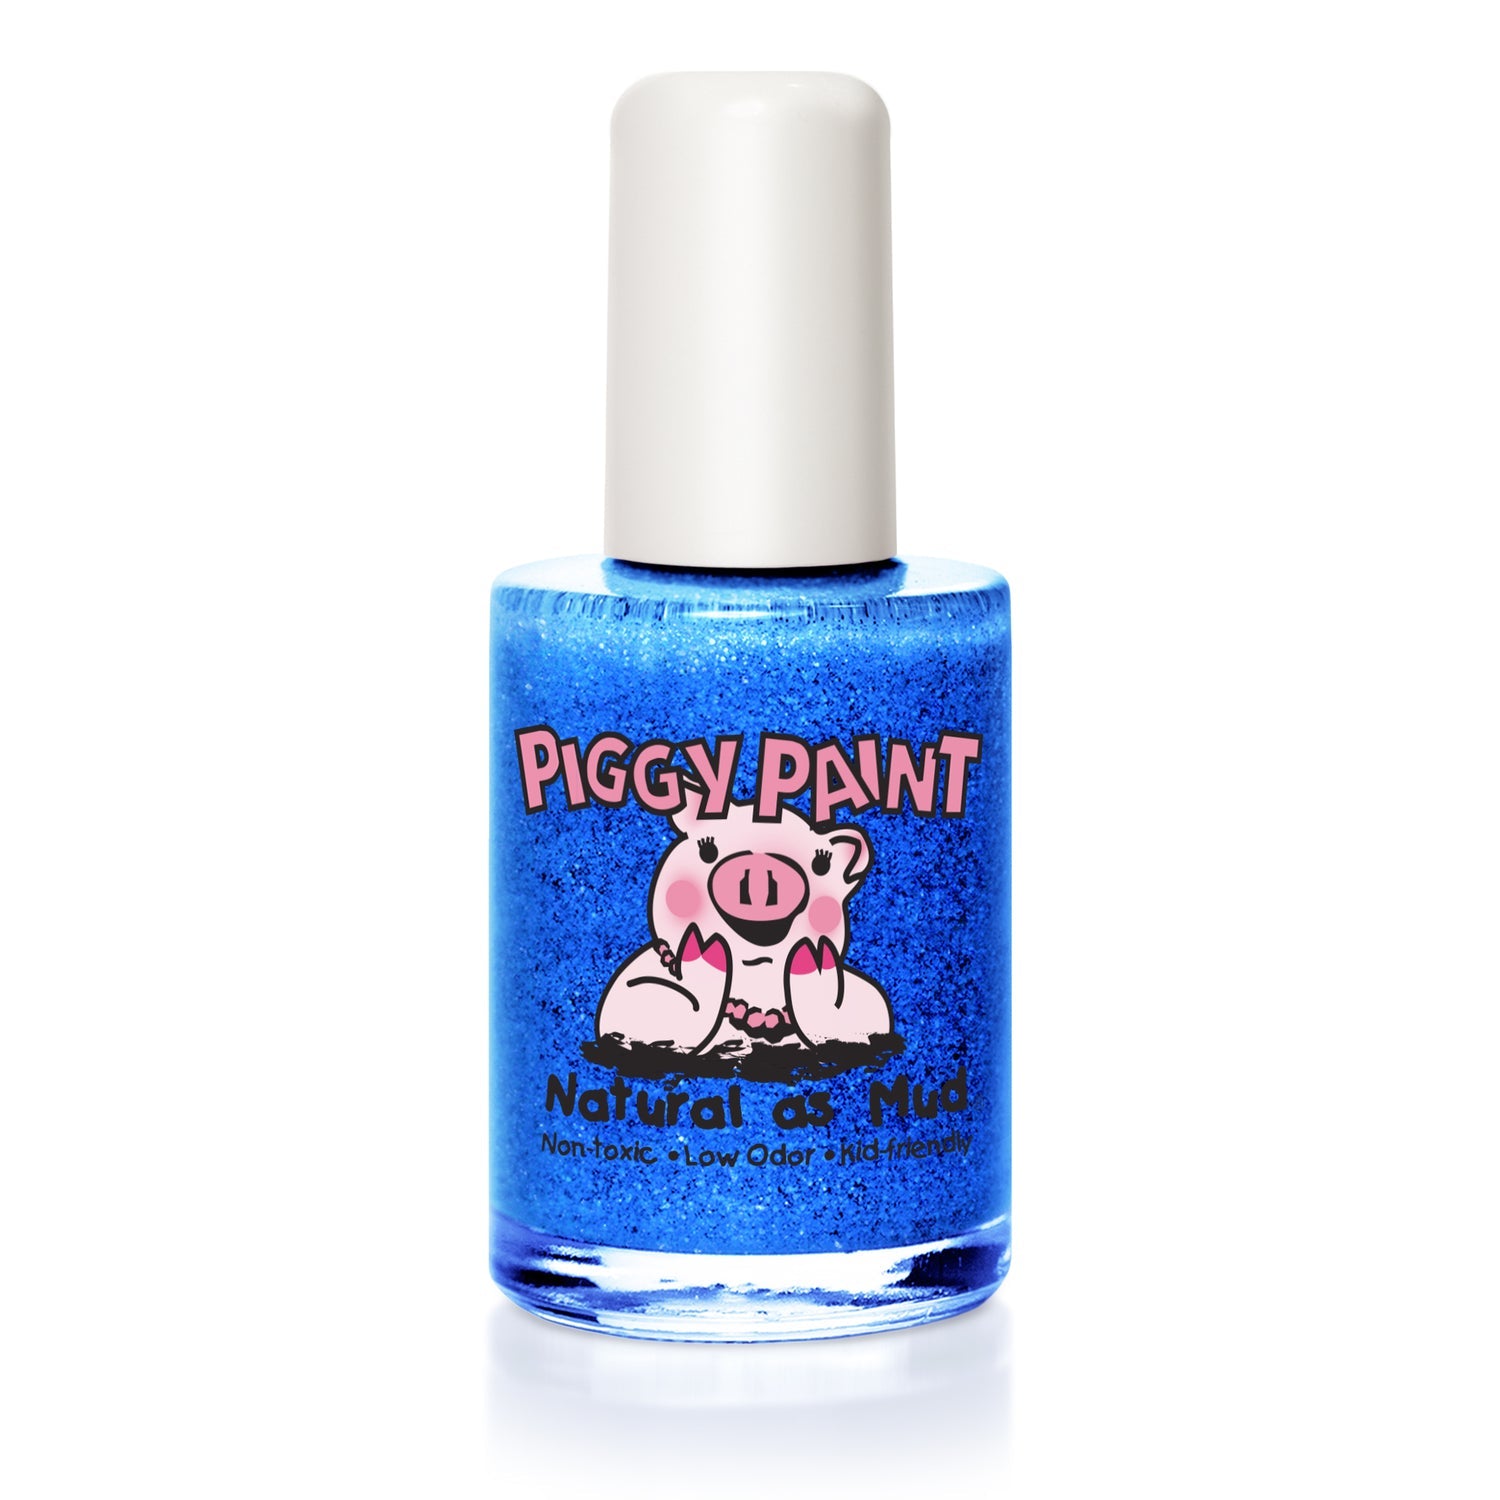 Piggy Paint Nail Polish - Mermaid Glitter Royal Blue